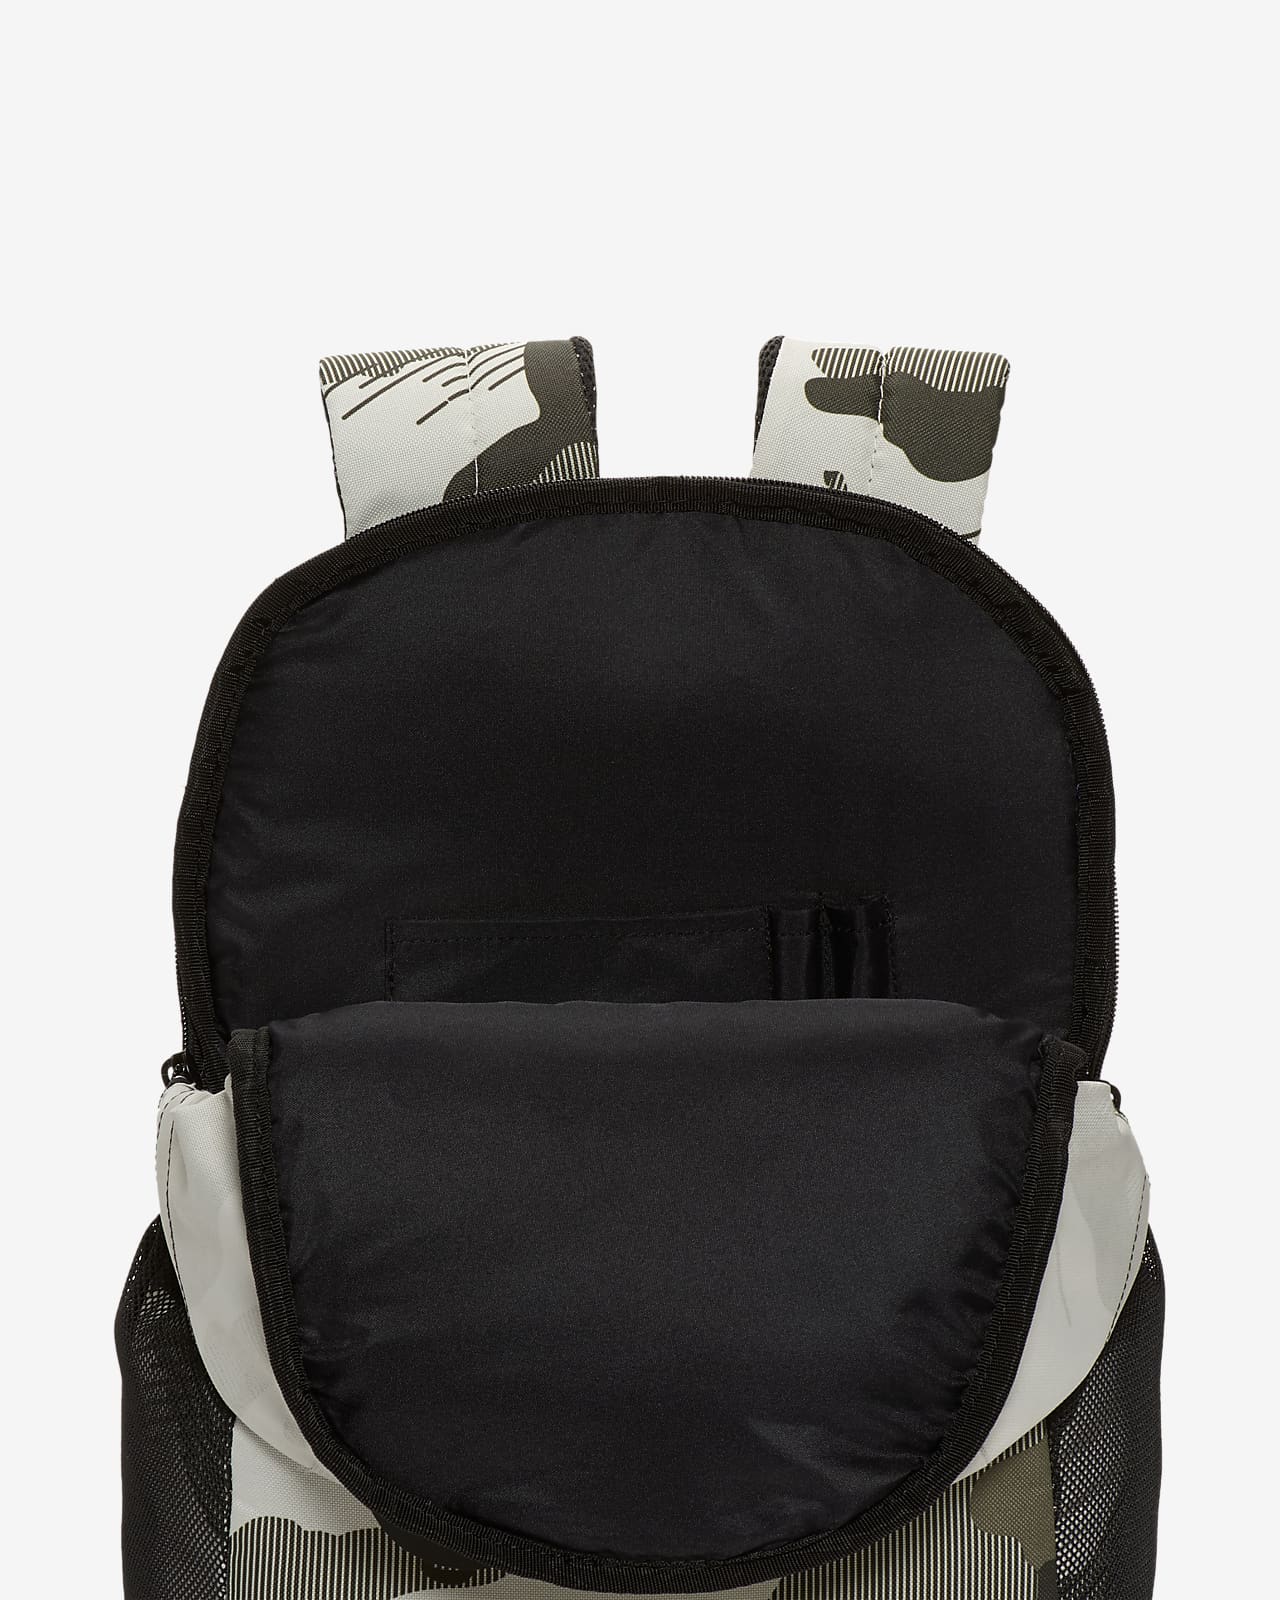 nike training backpack in black sparkle print